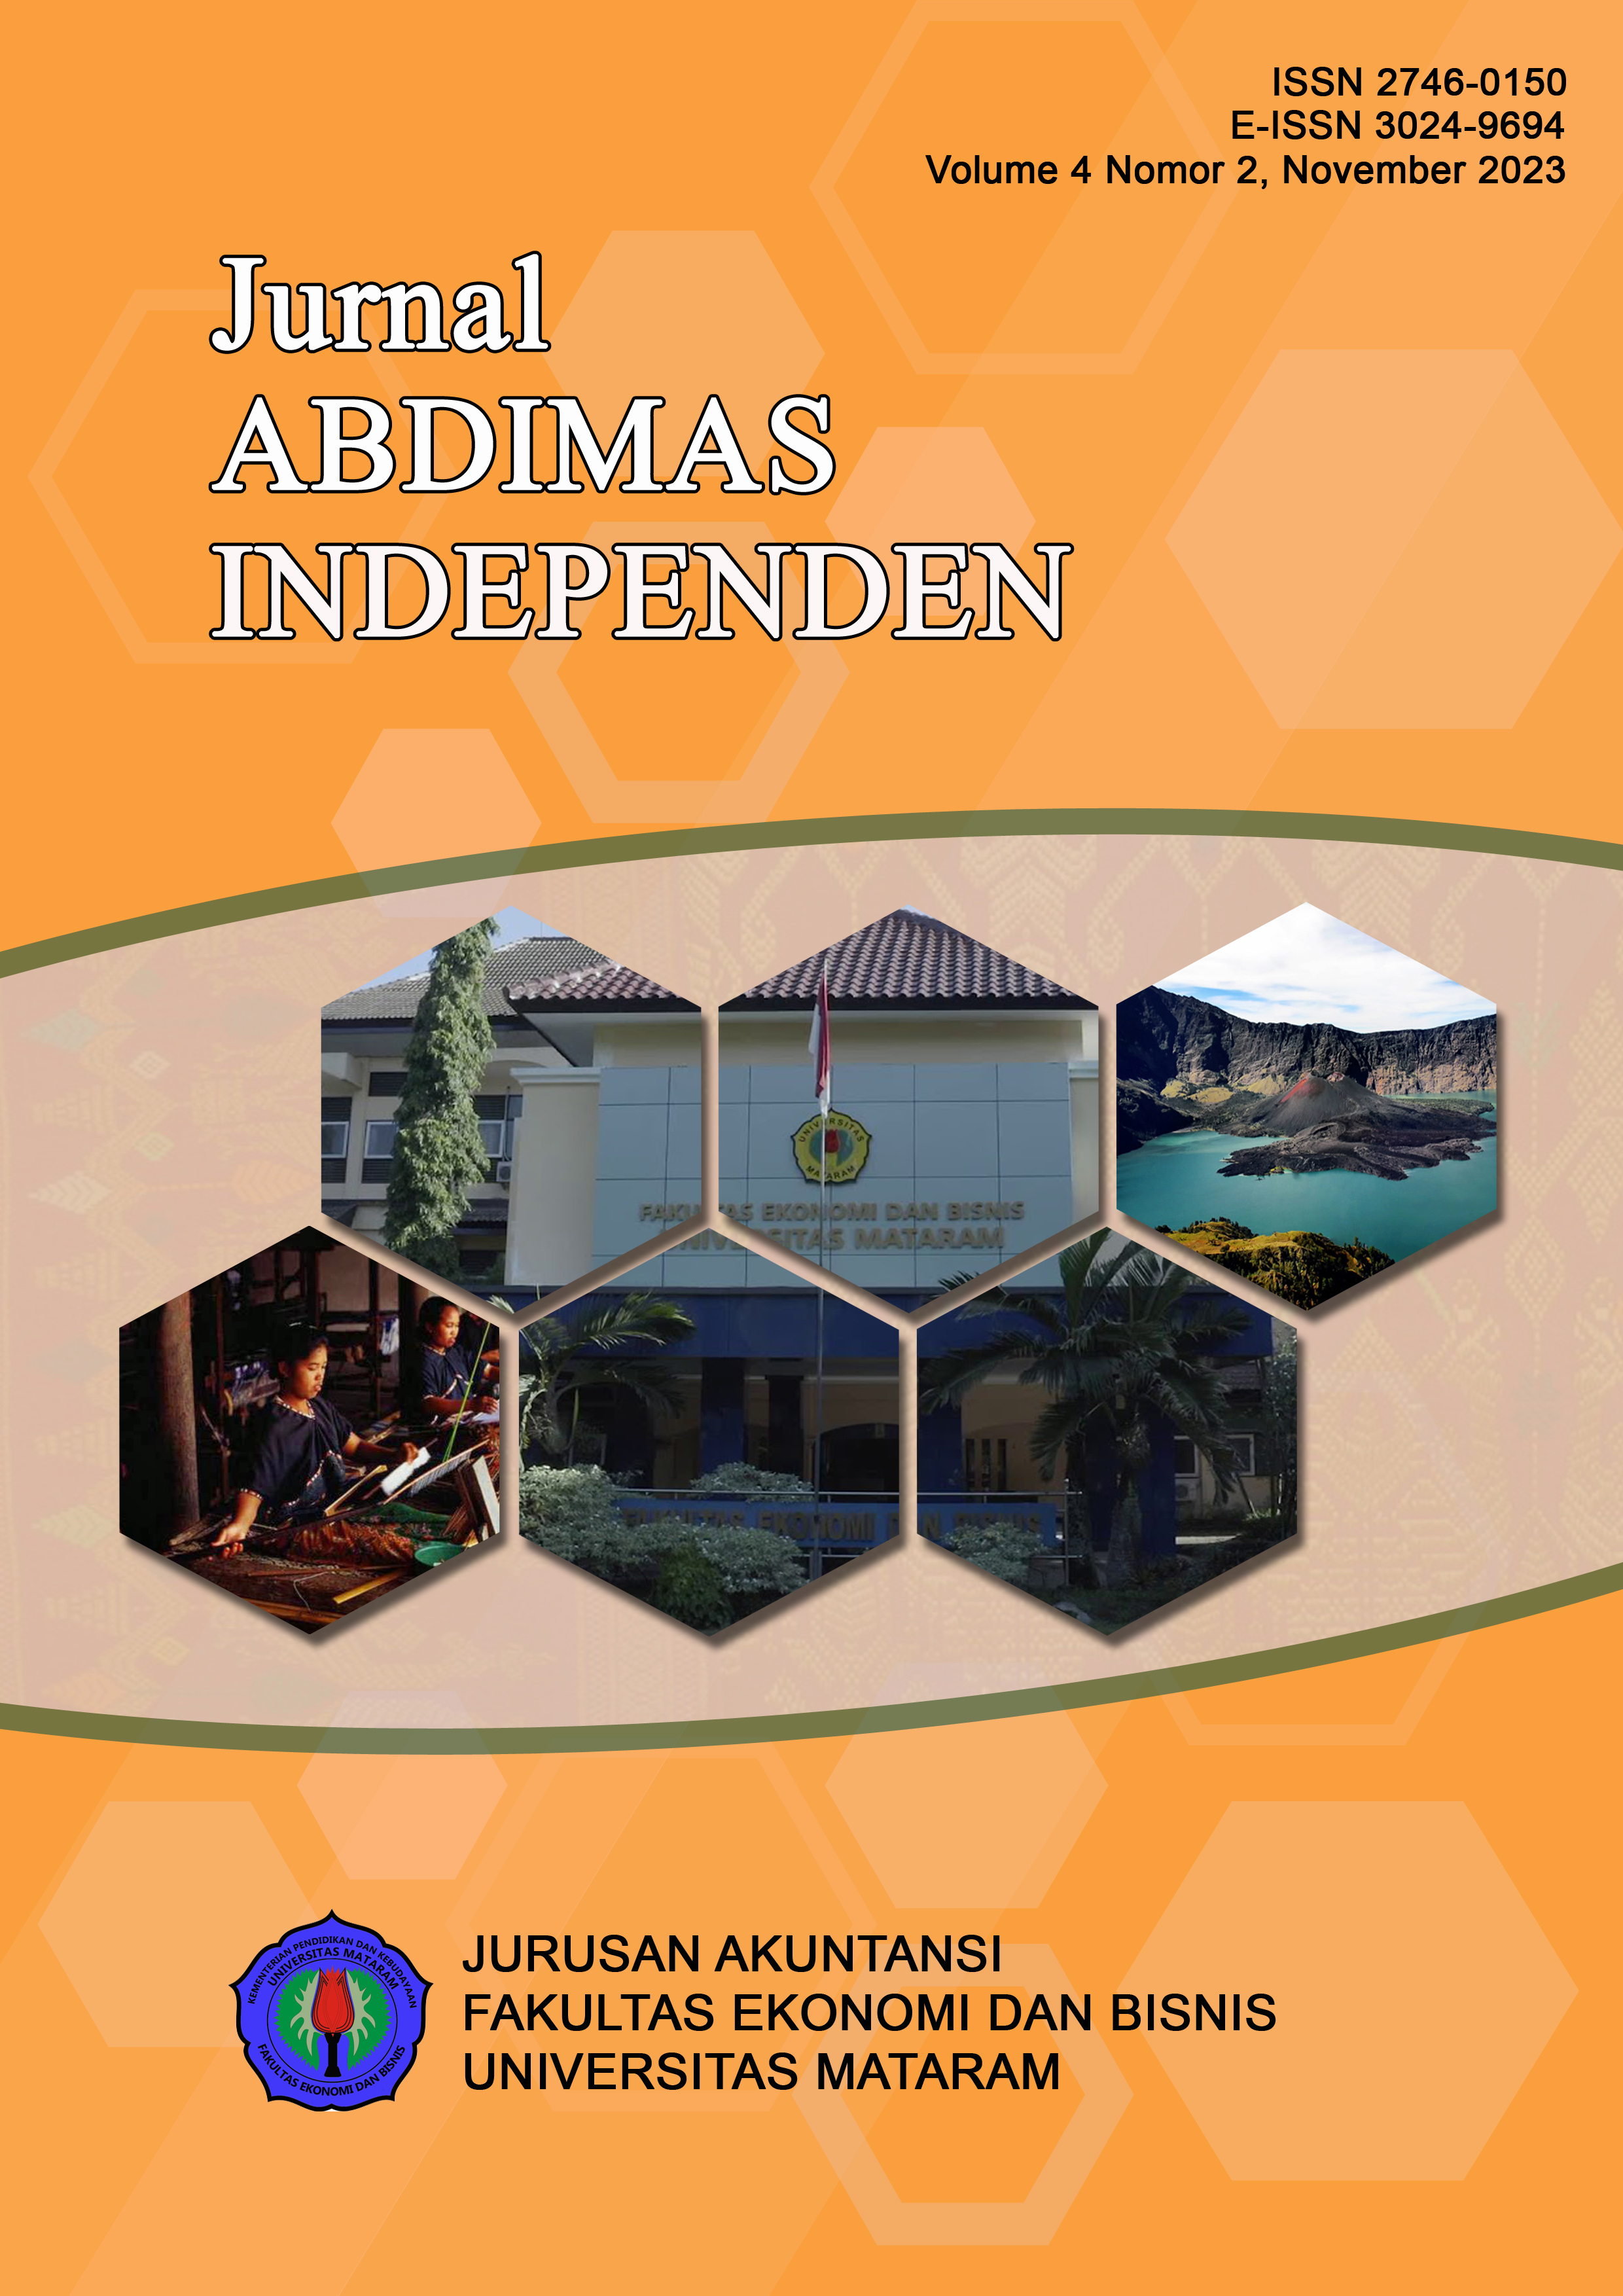 					View Vol. 4 No. 2 (2023): Jurnal Abdimas Independen, November 2023
				